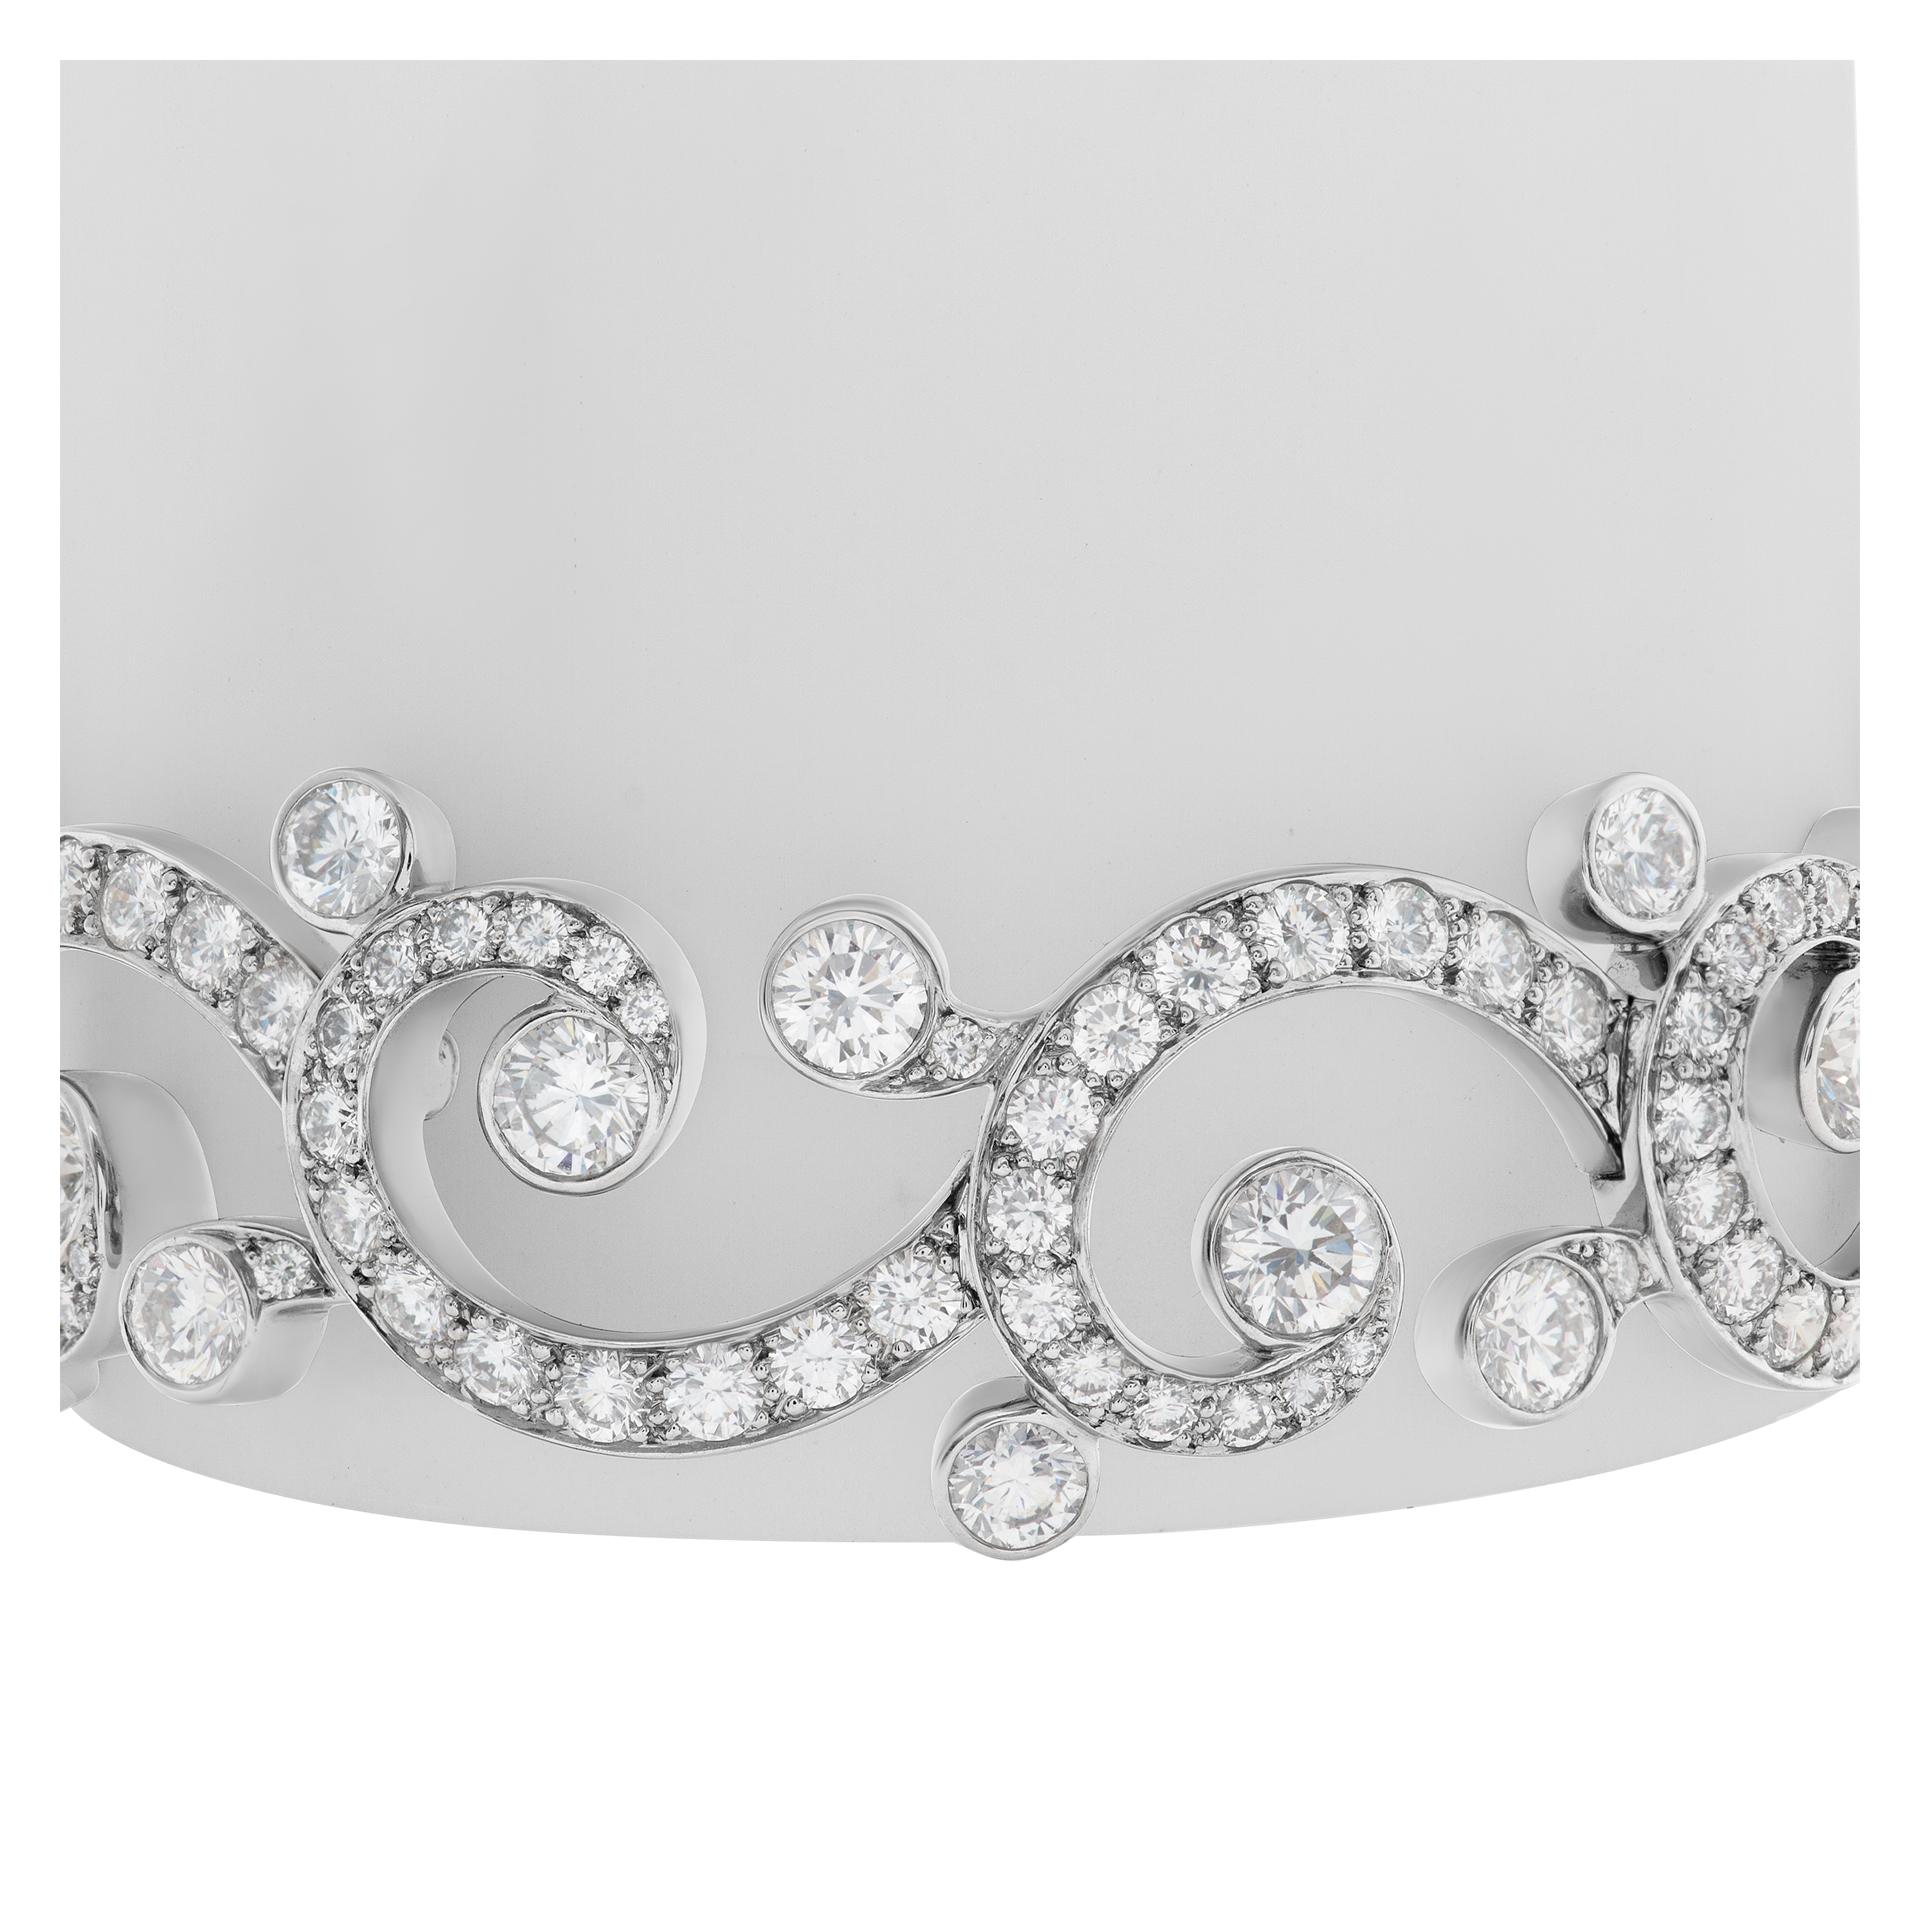 Women's Cartier Diamond Bangle Bracelet in Platinum